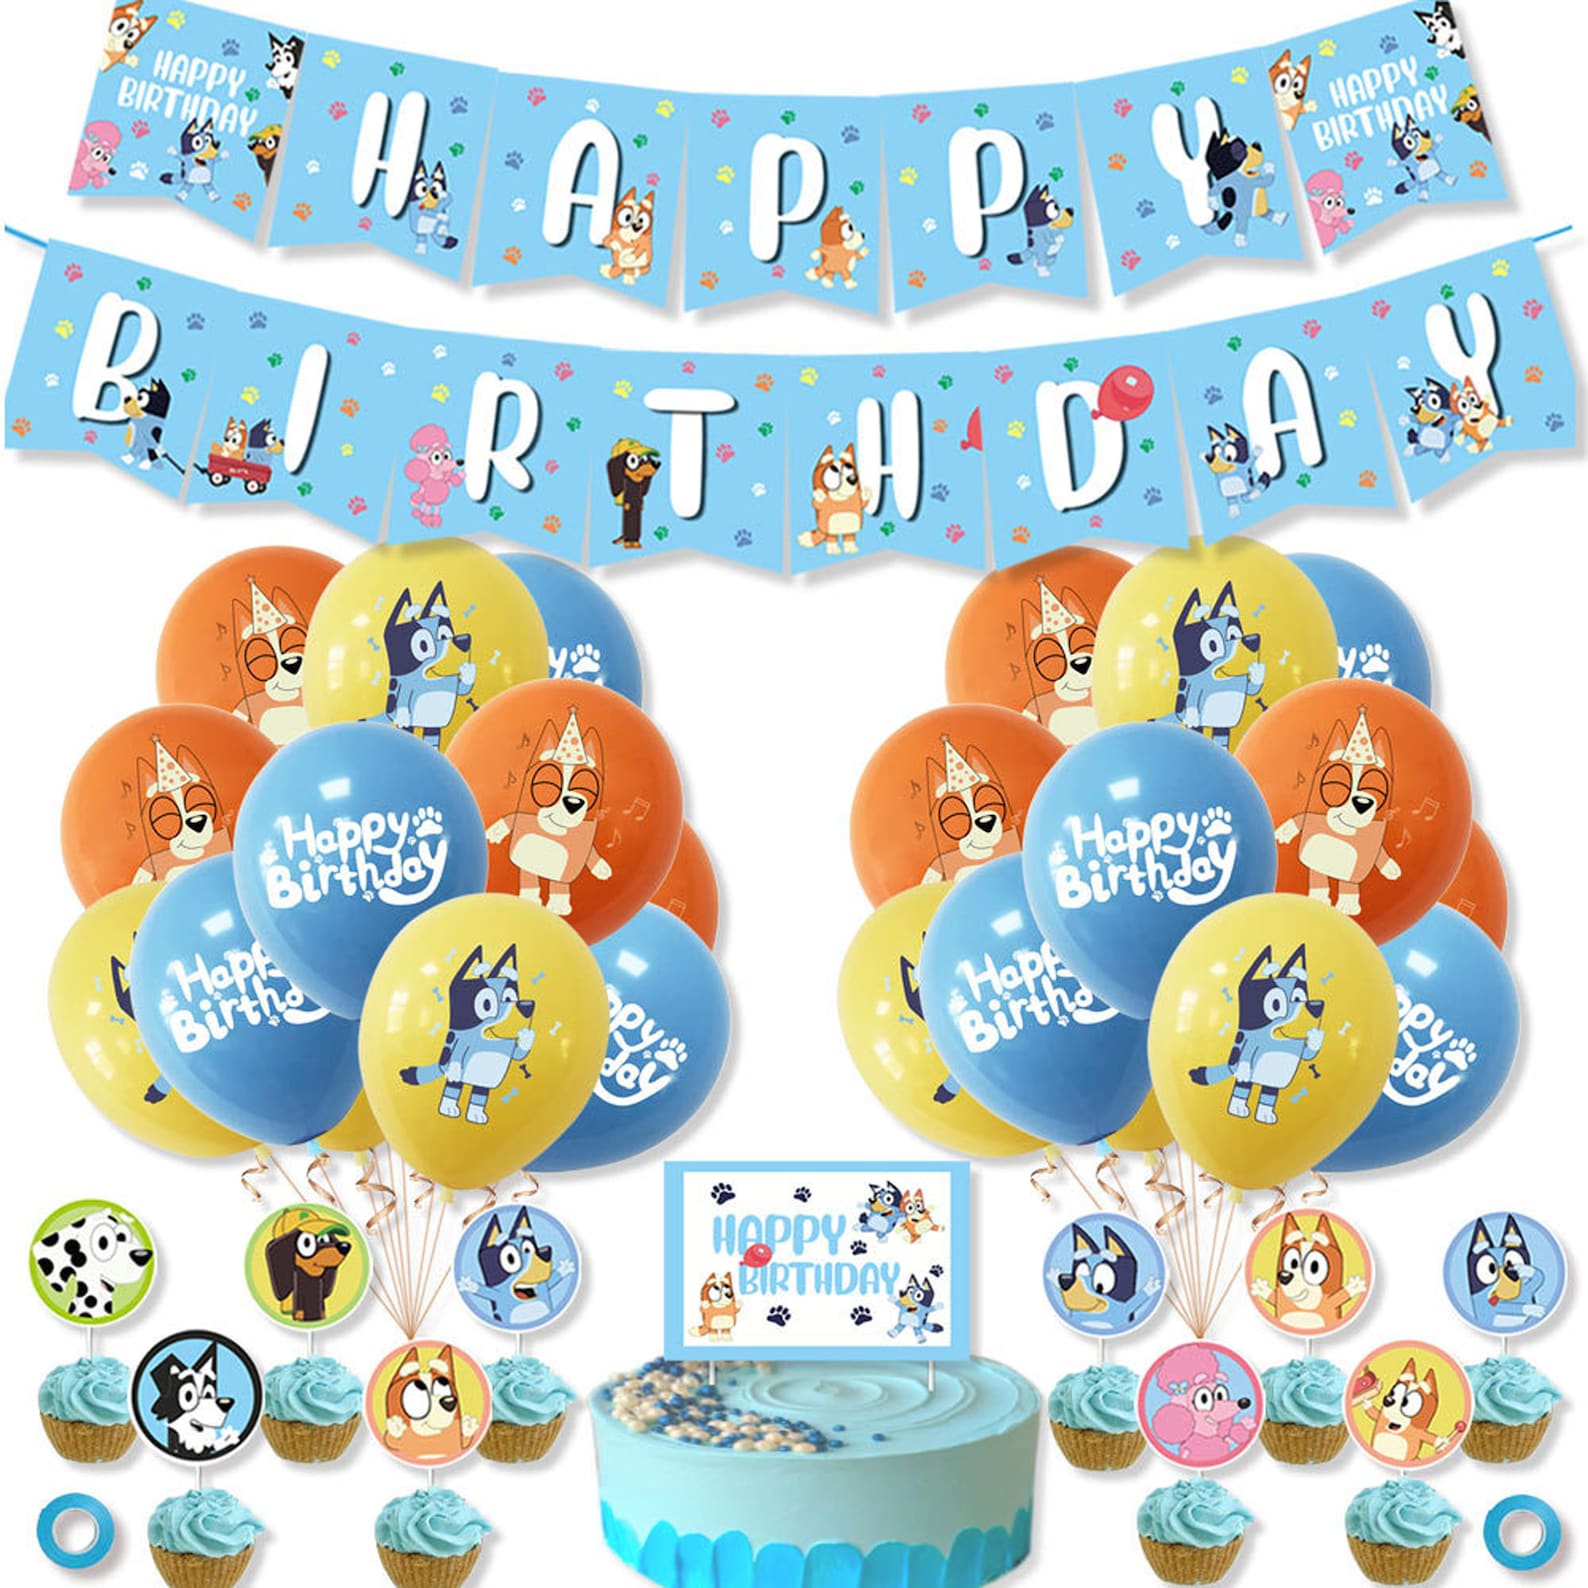 Bingo bluey theme birthday set favor party supplies decoration | Etsy